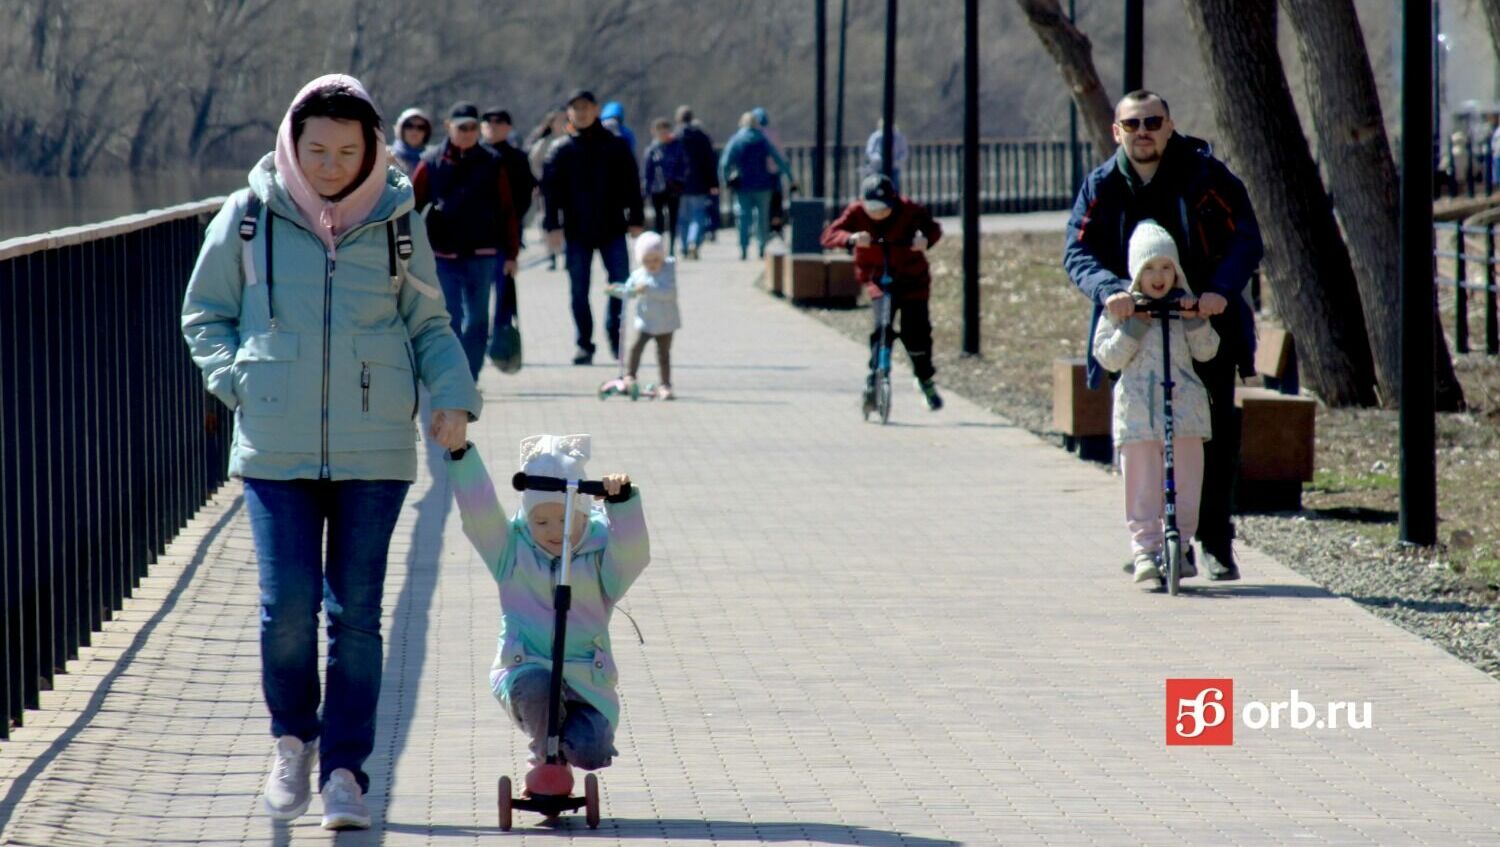 Оренбуржцы гуляют на улицах города